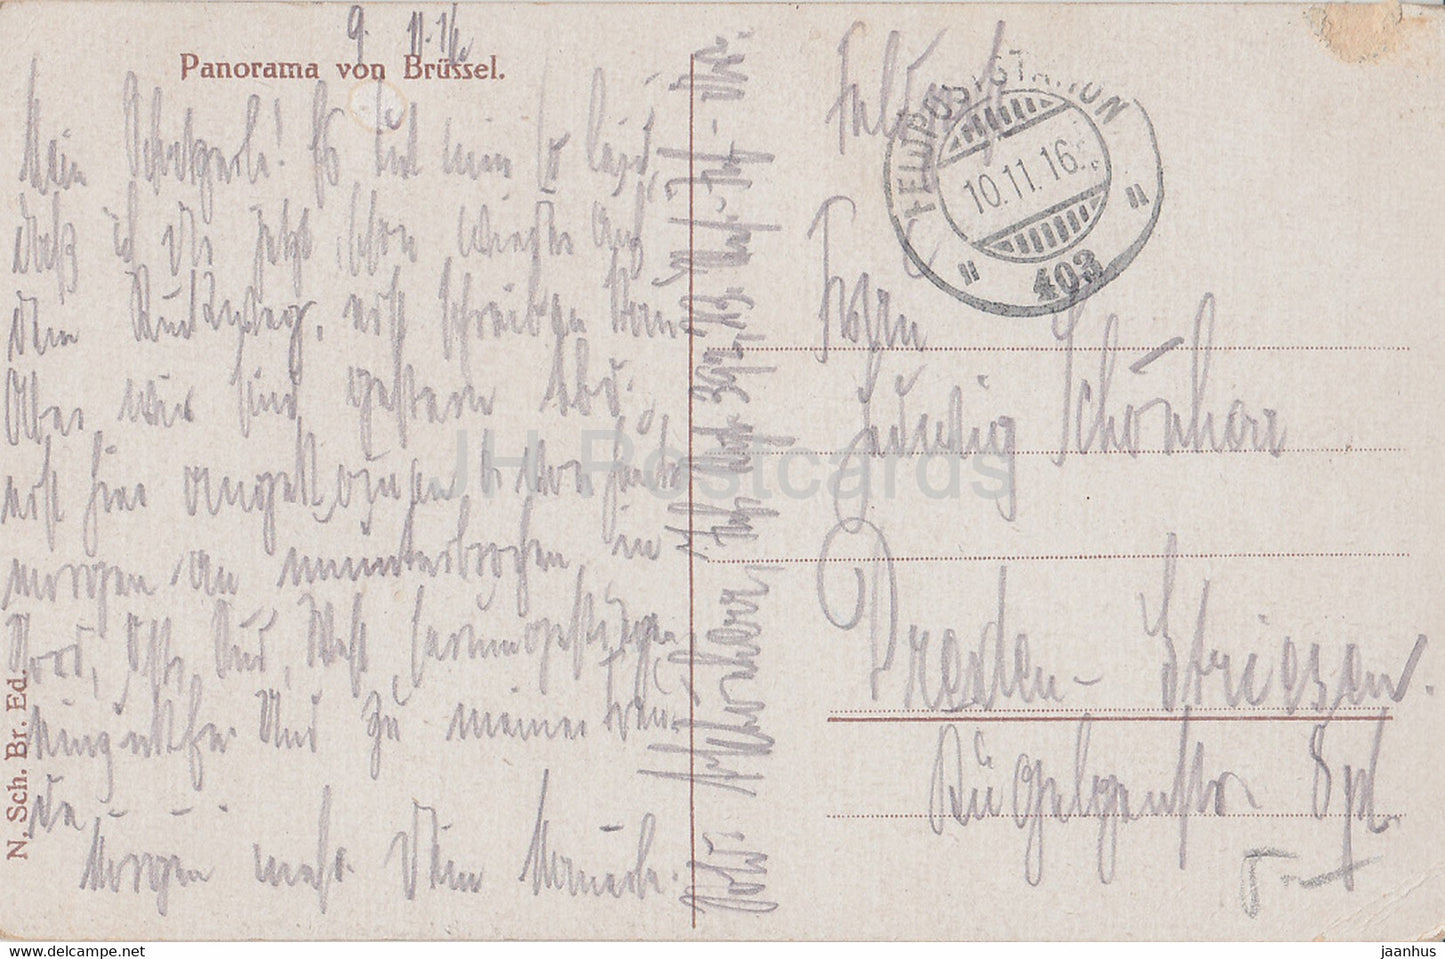 Brüssel - Brüssel - Panorama - Feldpost - alte Postkarte - 1916 - Belgien - gebraucht